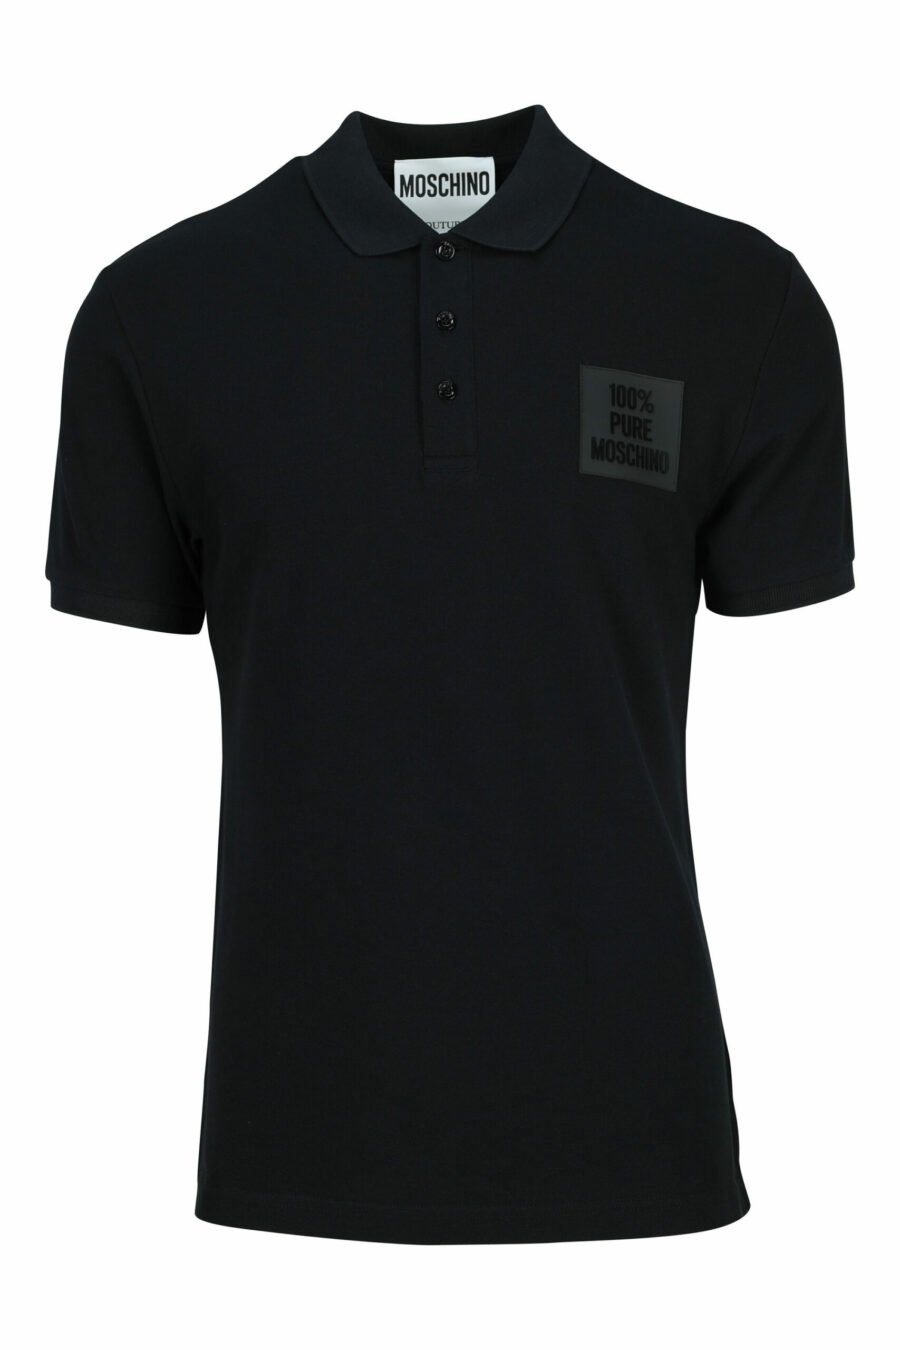 Polo noir avec logo carré monochrome - 667113765976 scaled